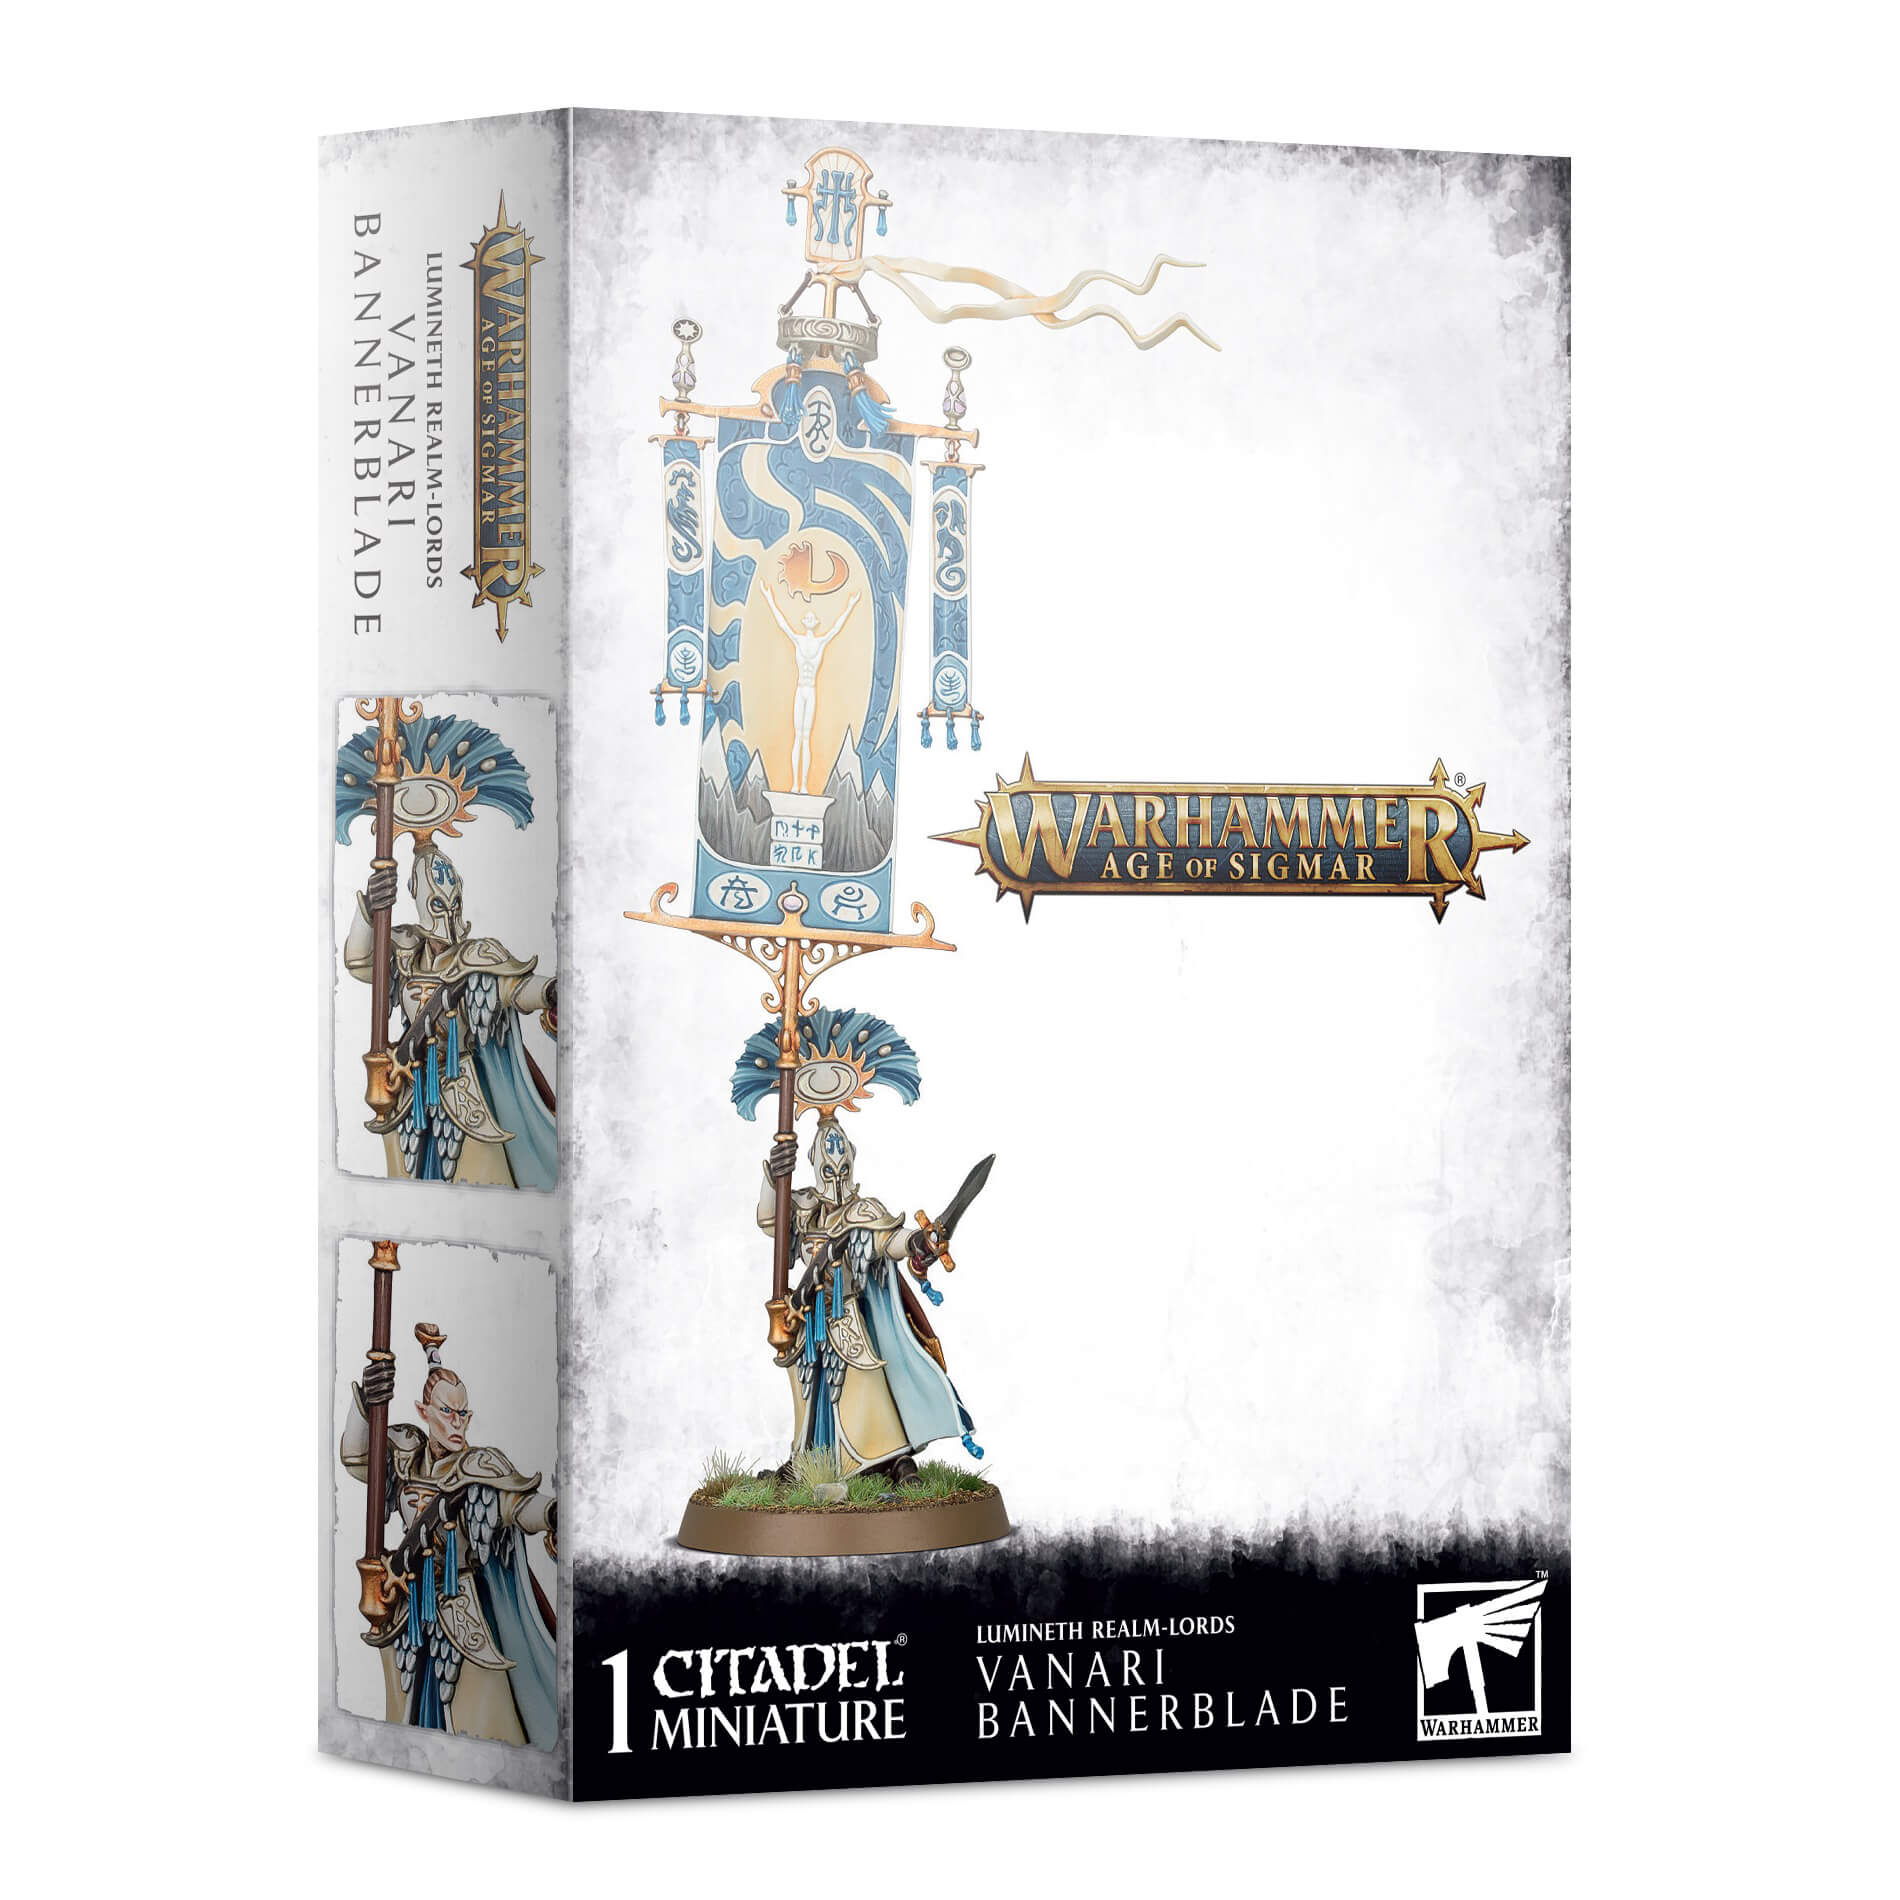 Warhammer Age of Sigmar Lumineth Realm-Lords Vanari Bannerblade Miniature